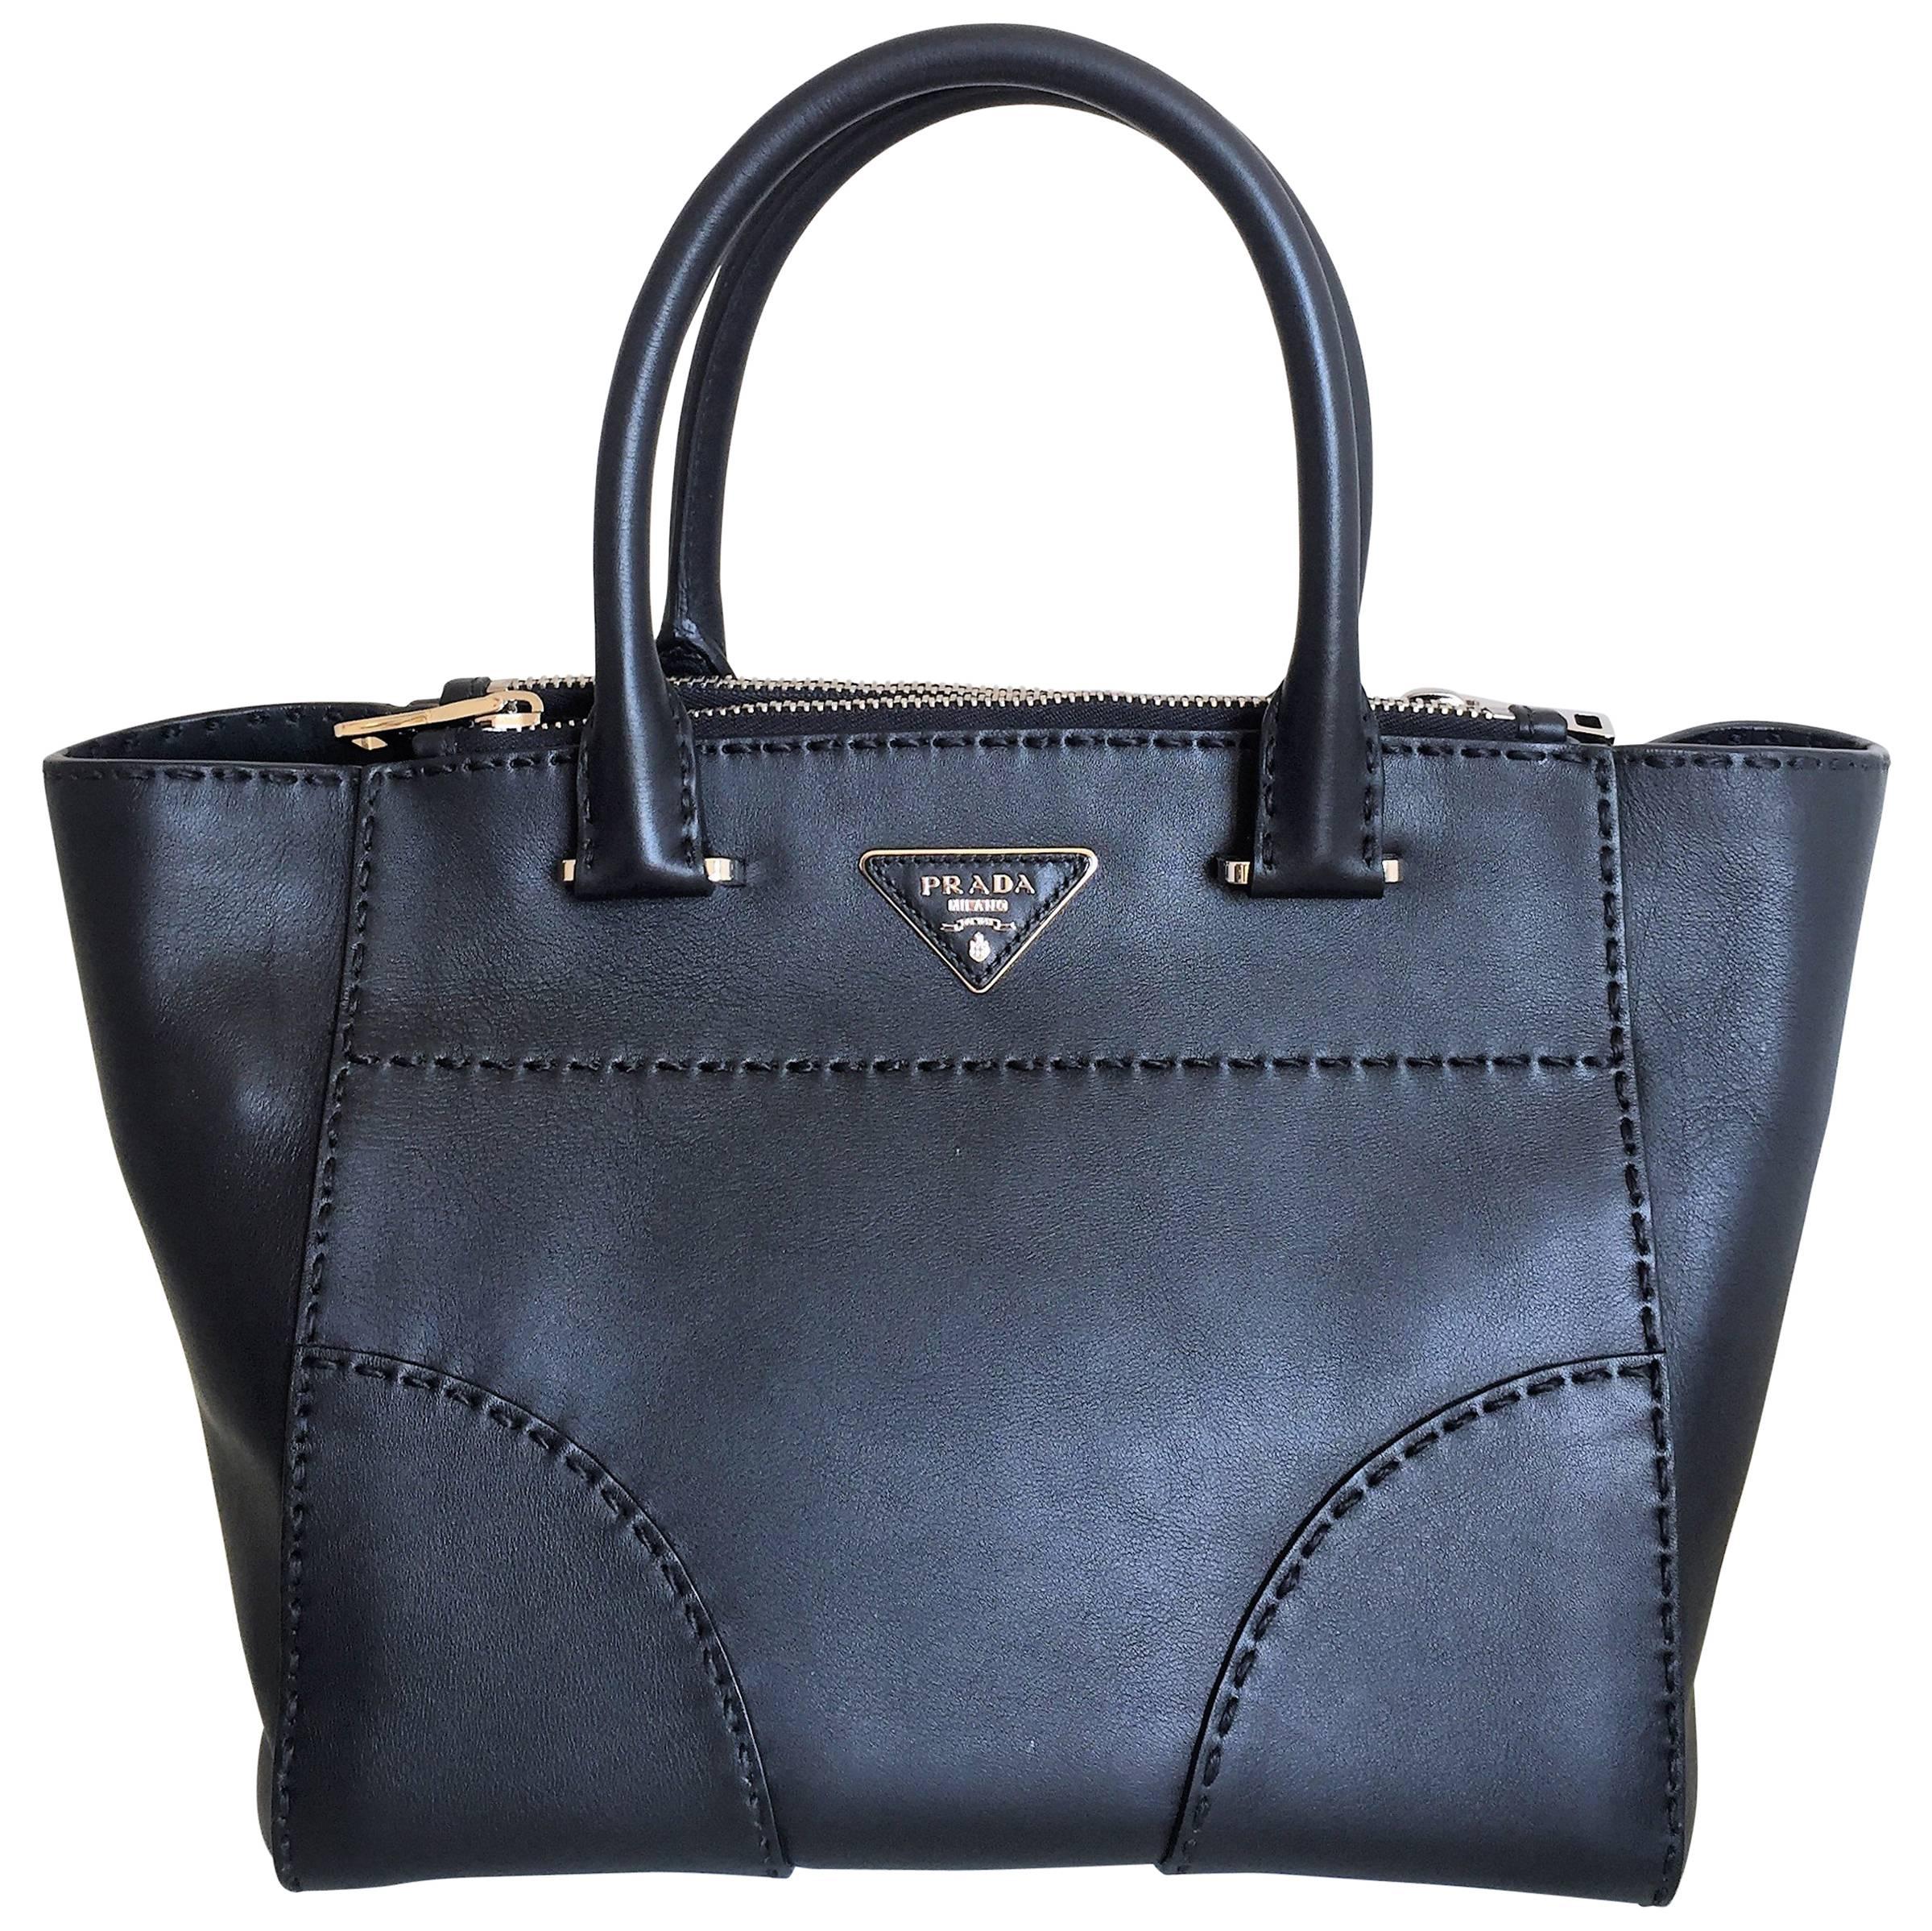 Prada Black Leather Shoulder bag, a Pristine '2way City' Calf Leather Tote For Sale